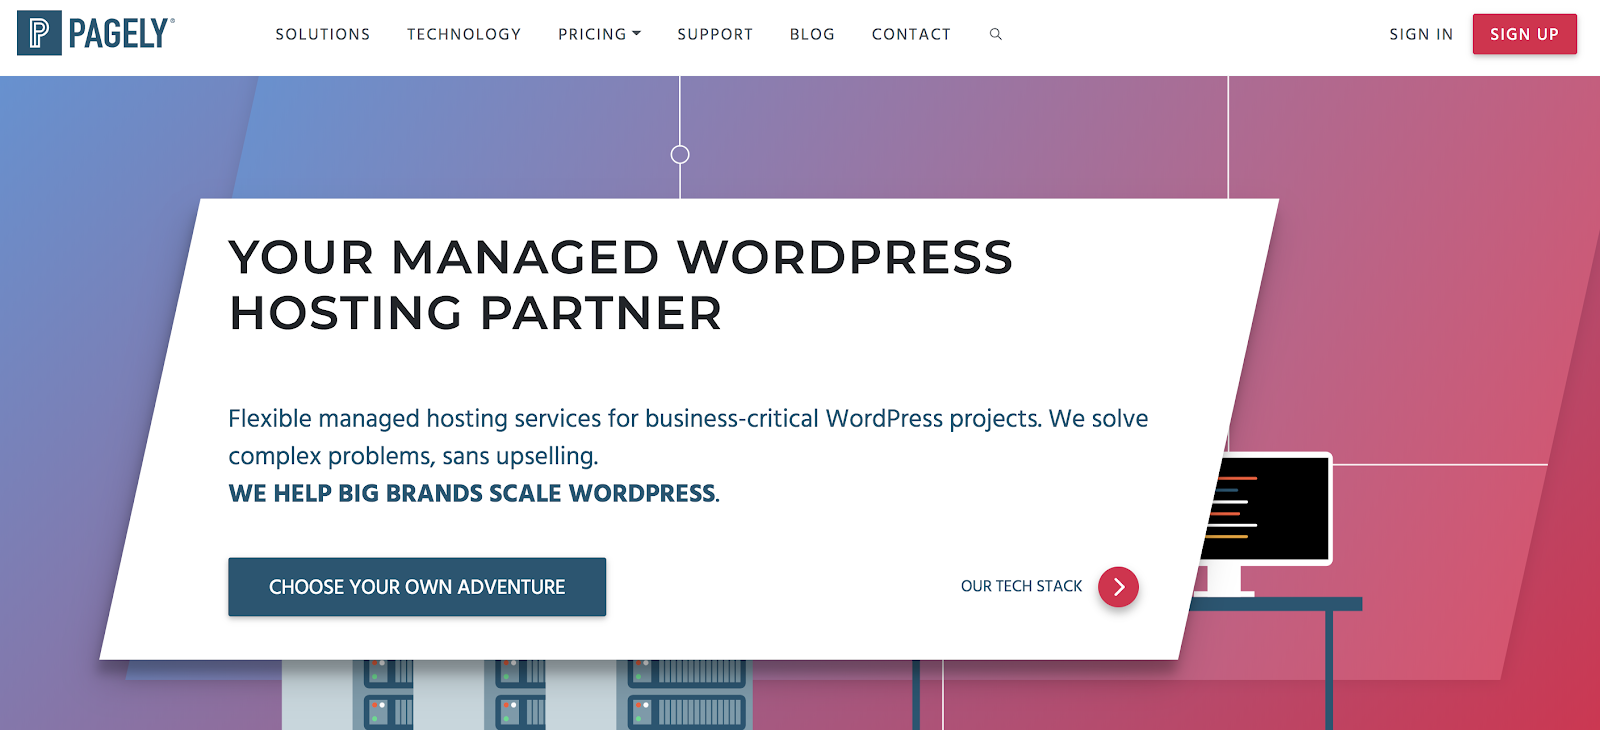 pagely-wordpress-hosting